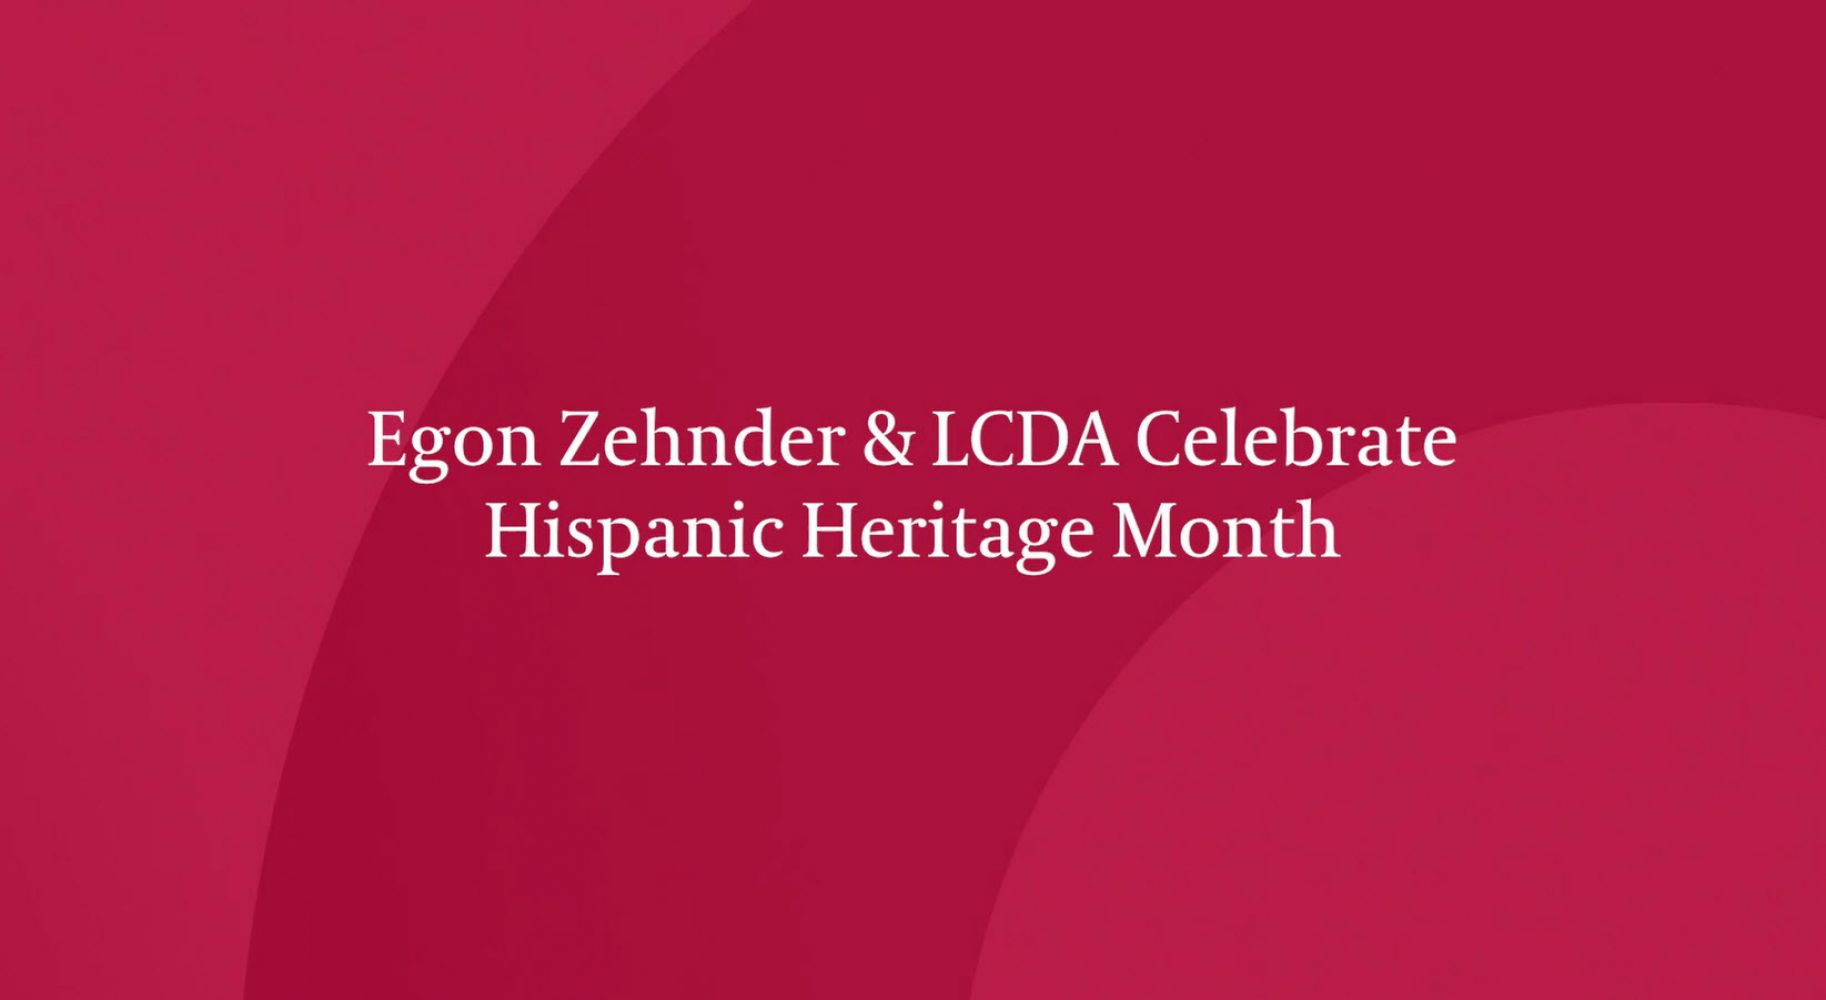 Egon Zehnder & LCDA Celebrate Hispanic Heritage Month